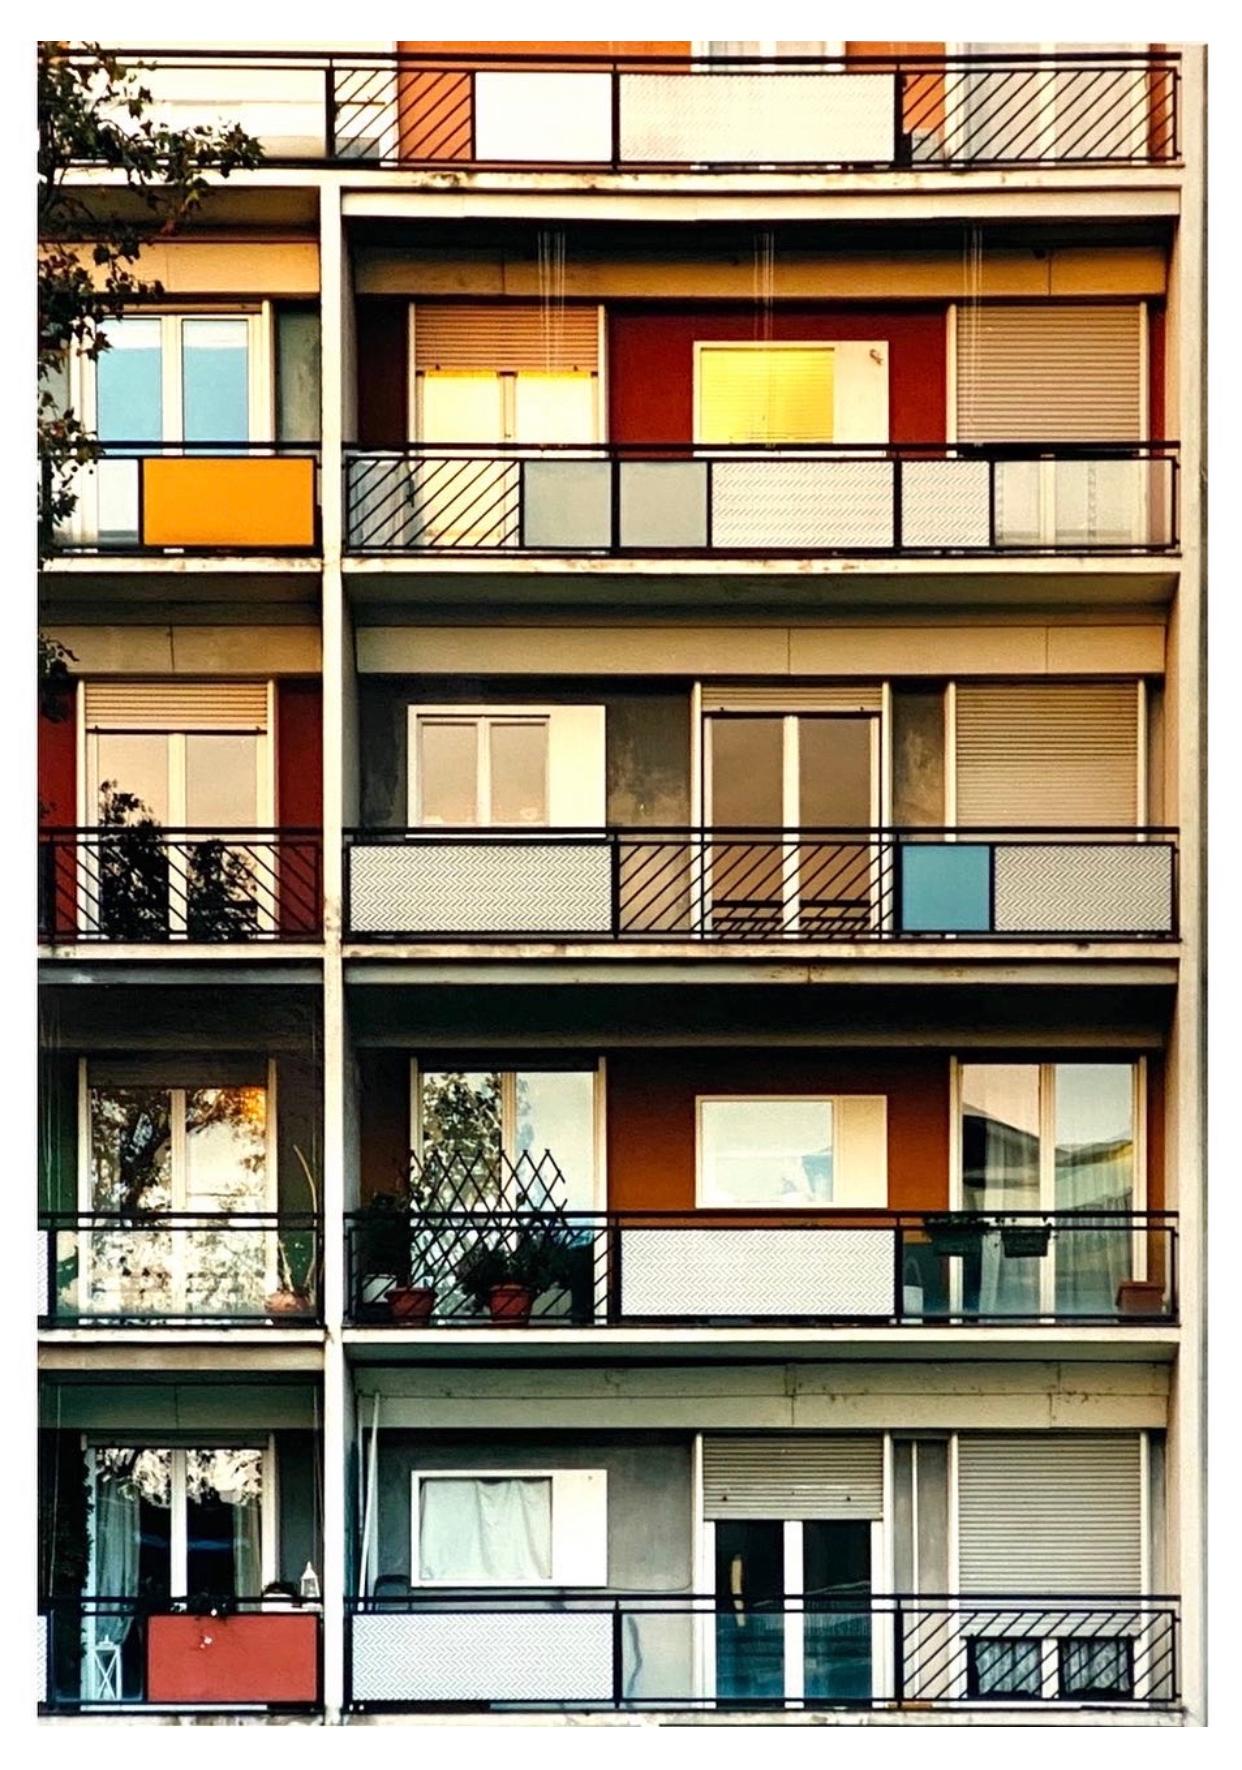 Richard Heeps Print - 49 Via Dezza at Sunset, Milan - Conceptual Architectural Color Photography